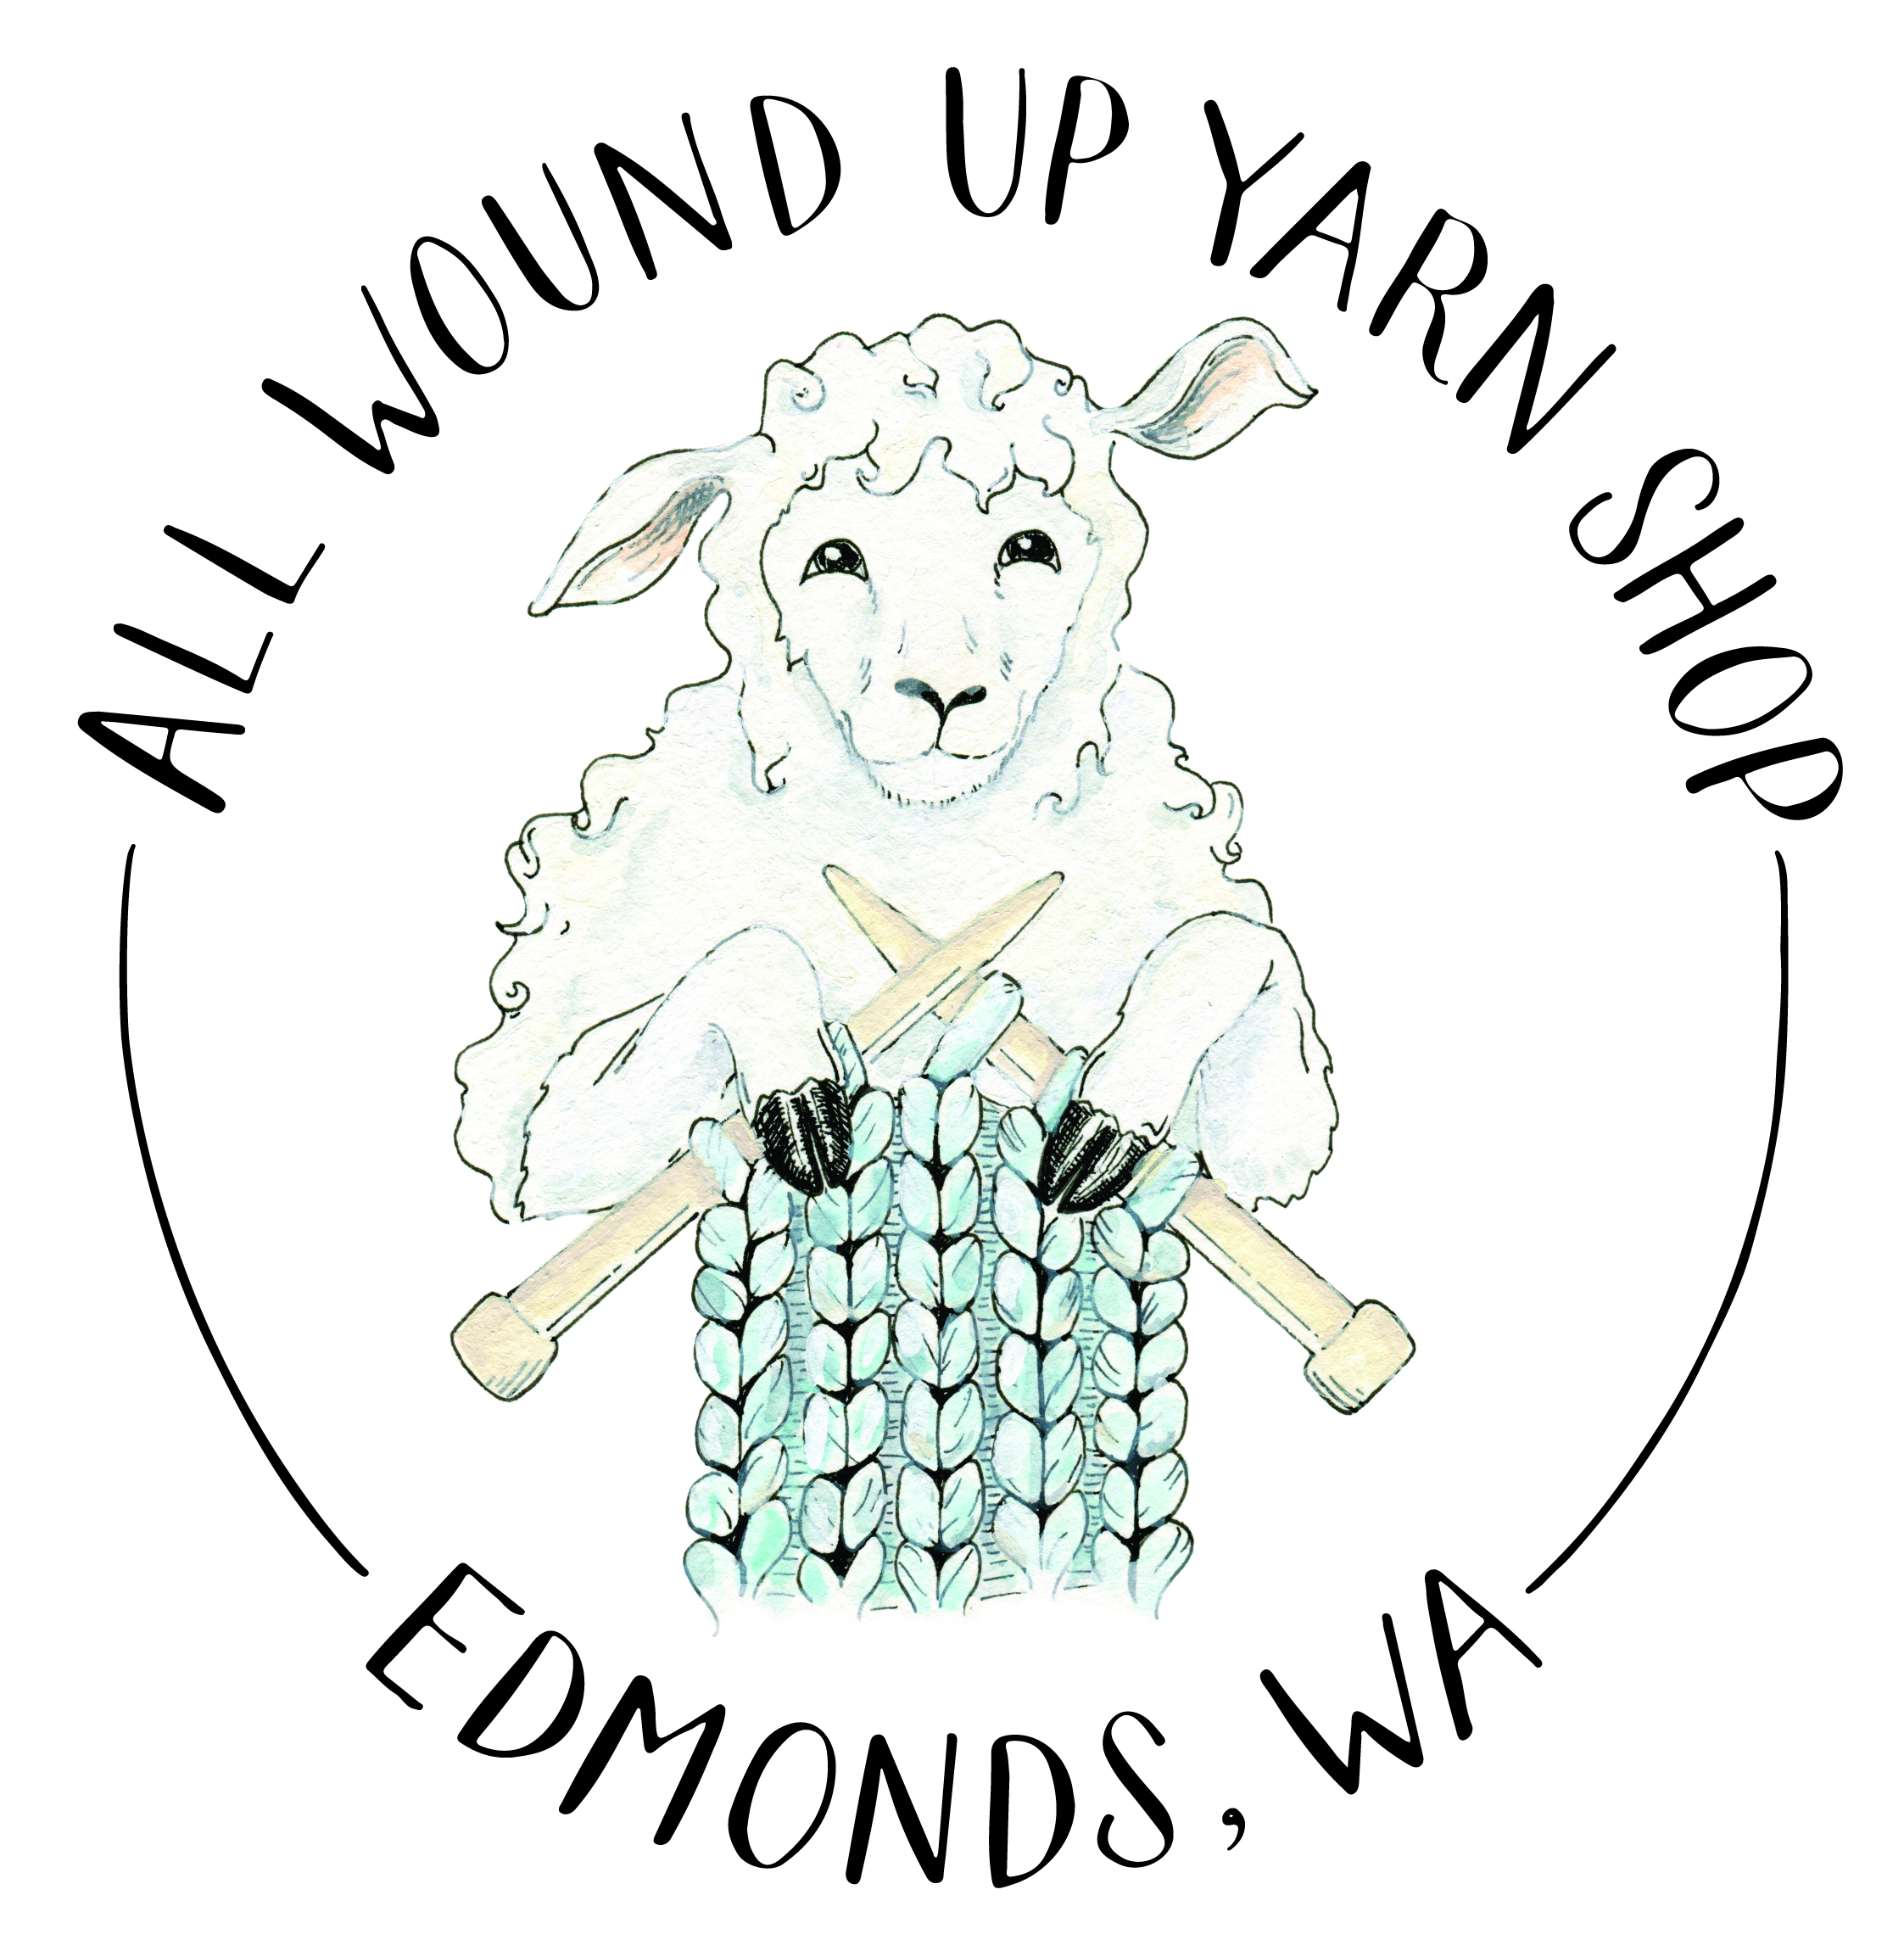 All Wound Up Yarn Shop